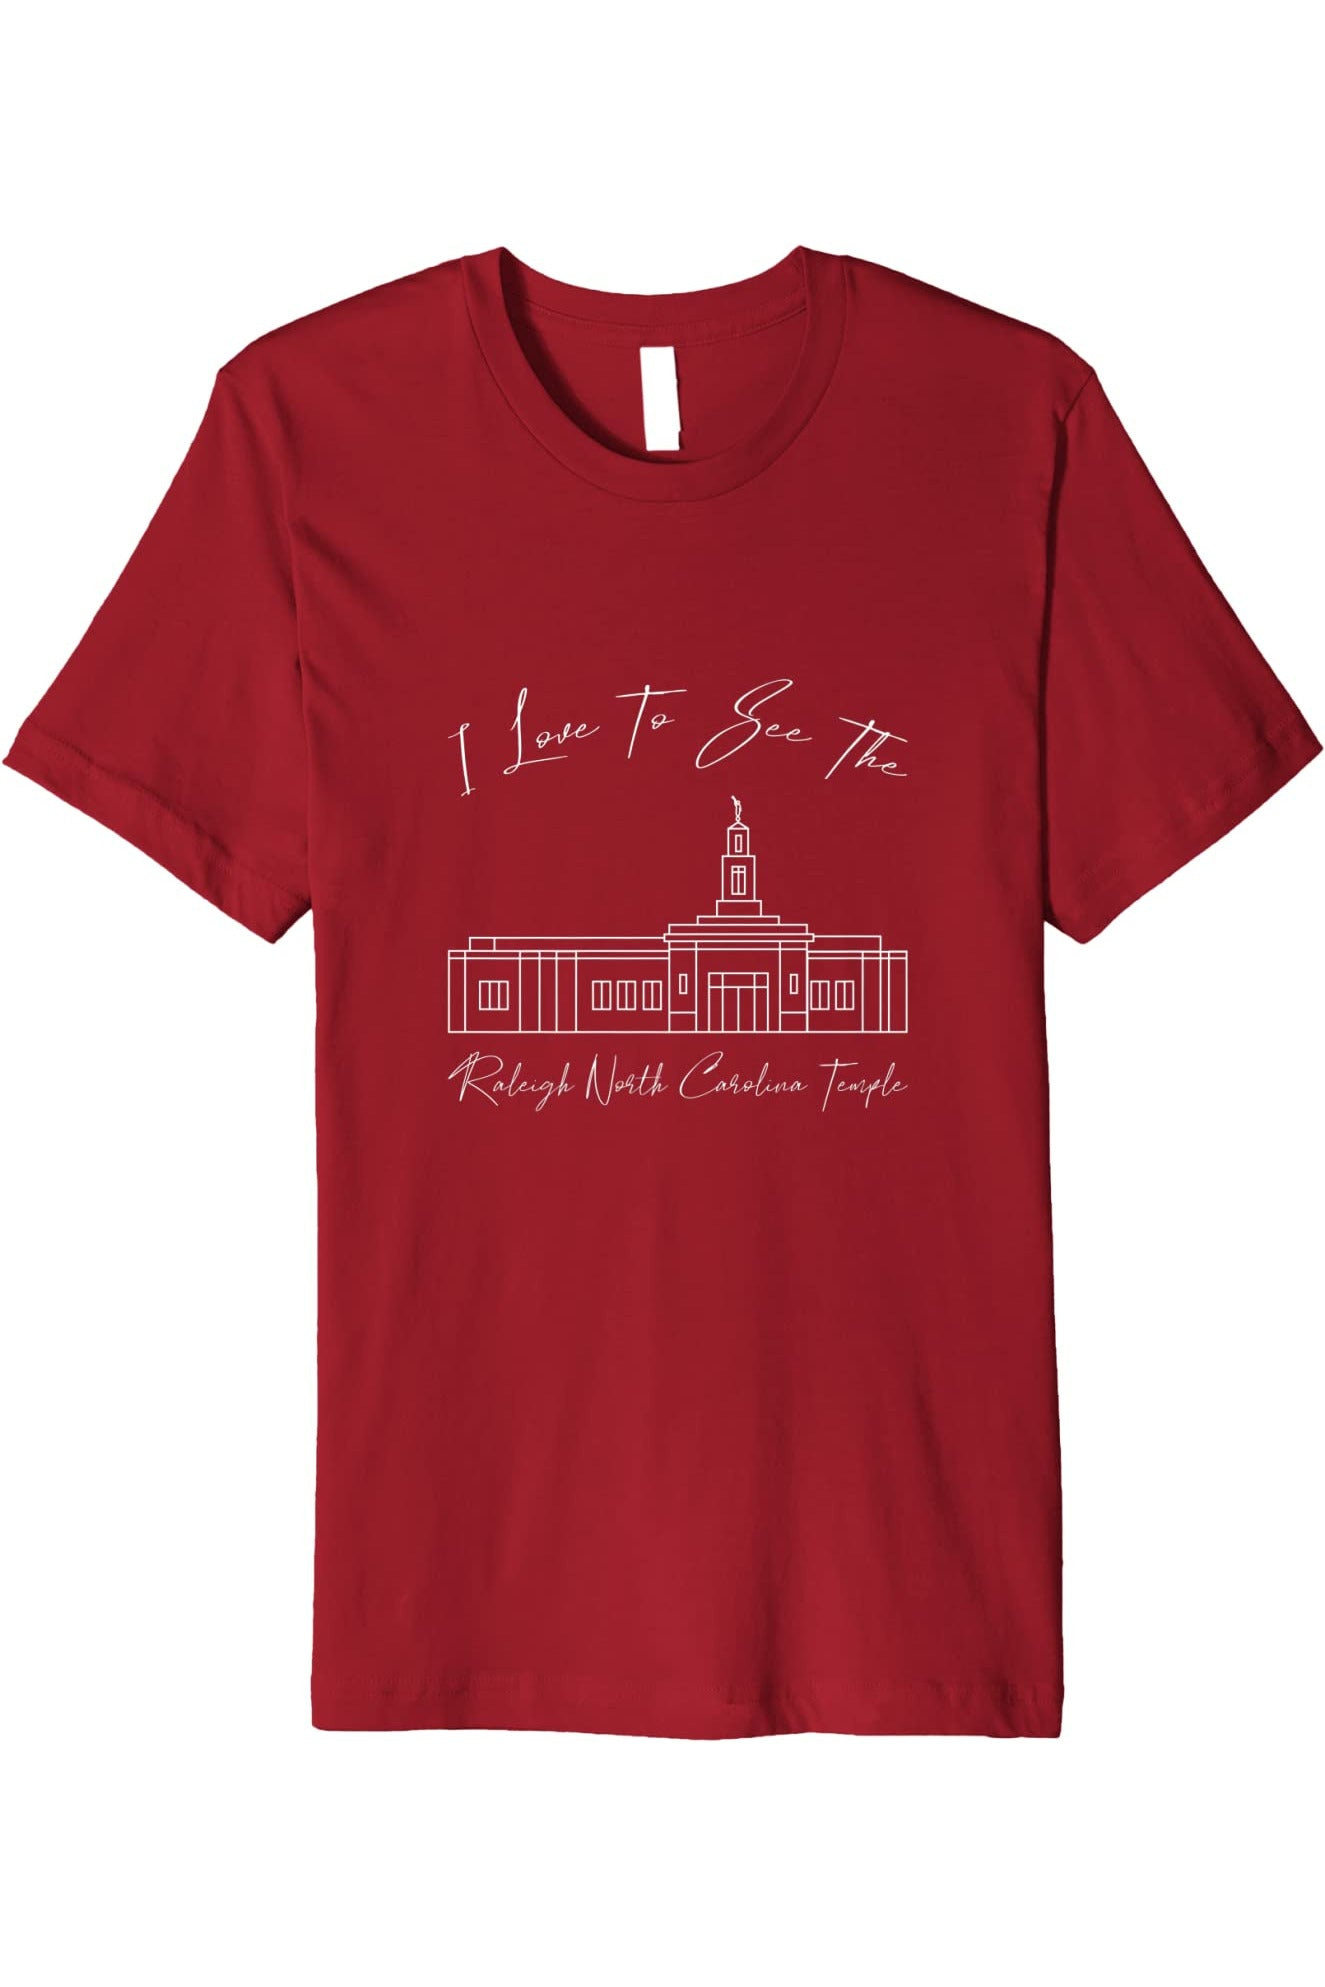 Raleigh North Carolina Temple T-Shirt - Premium - Calligraphy Style (English) US